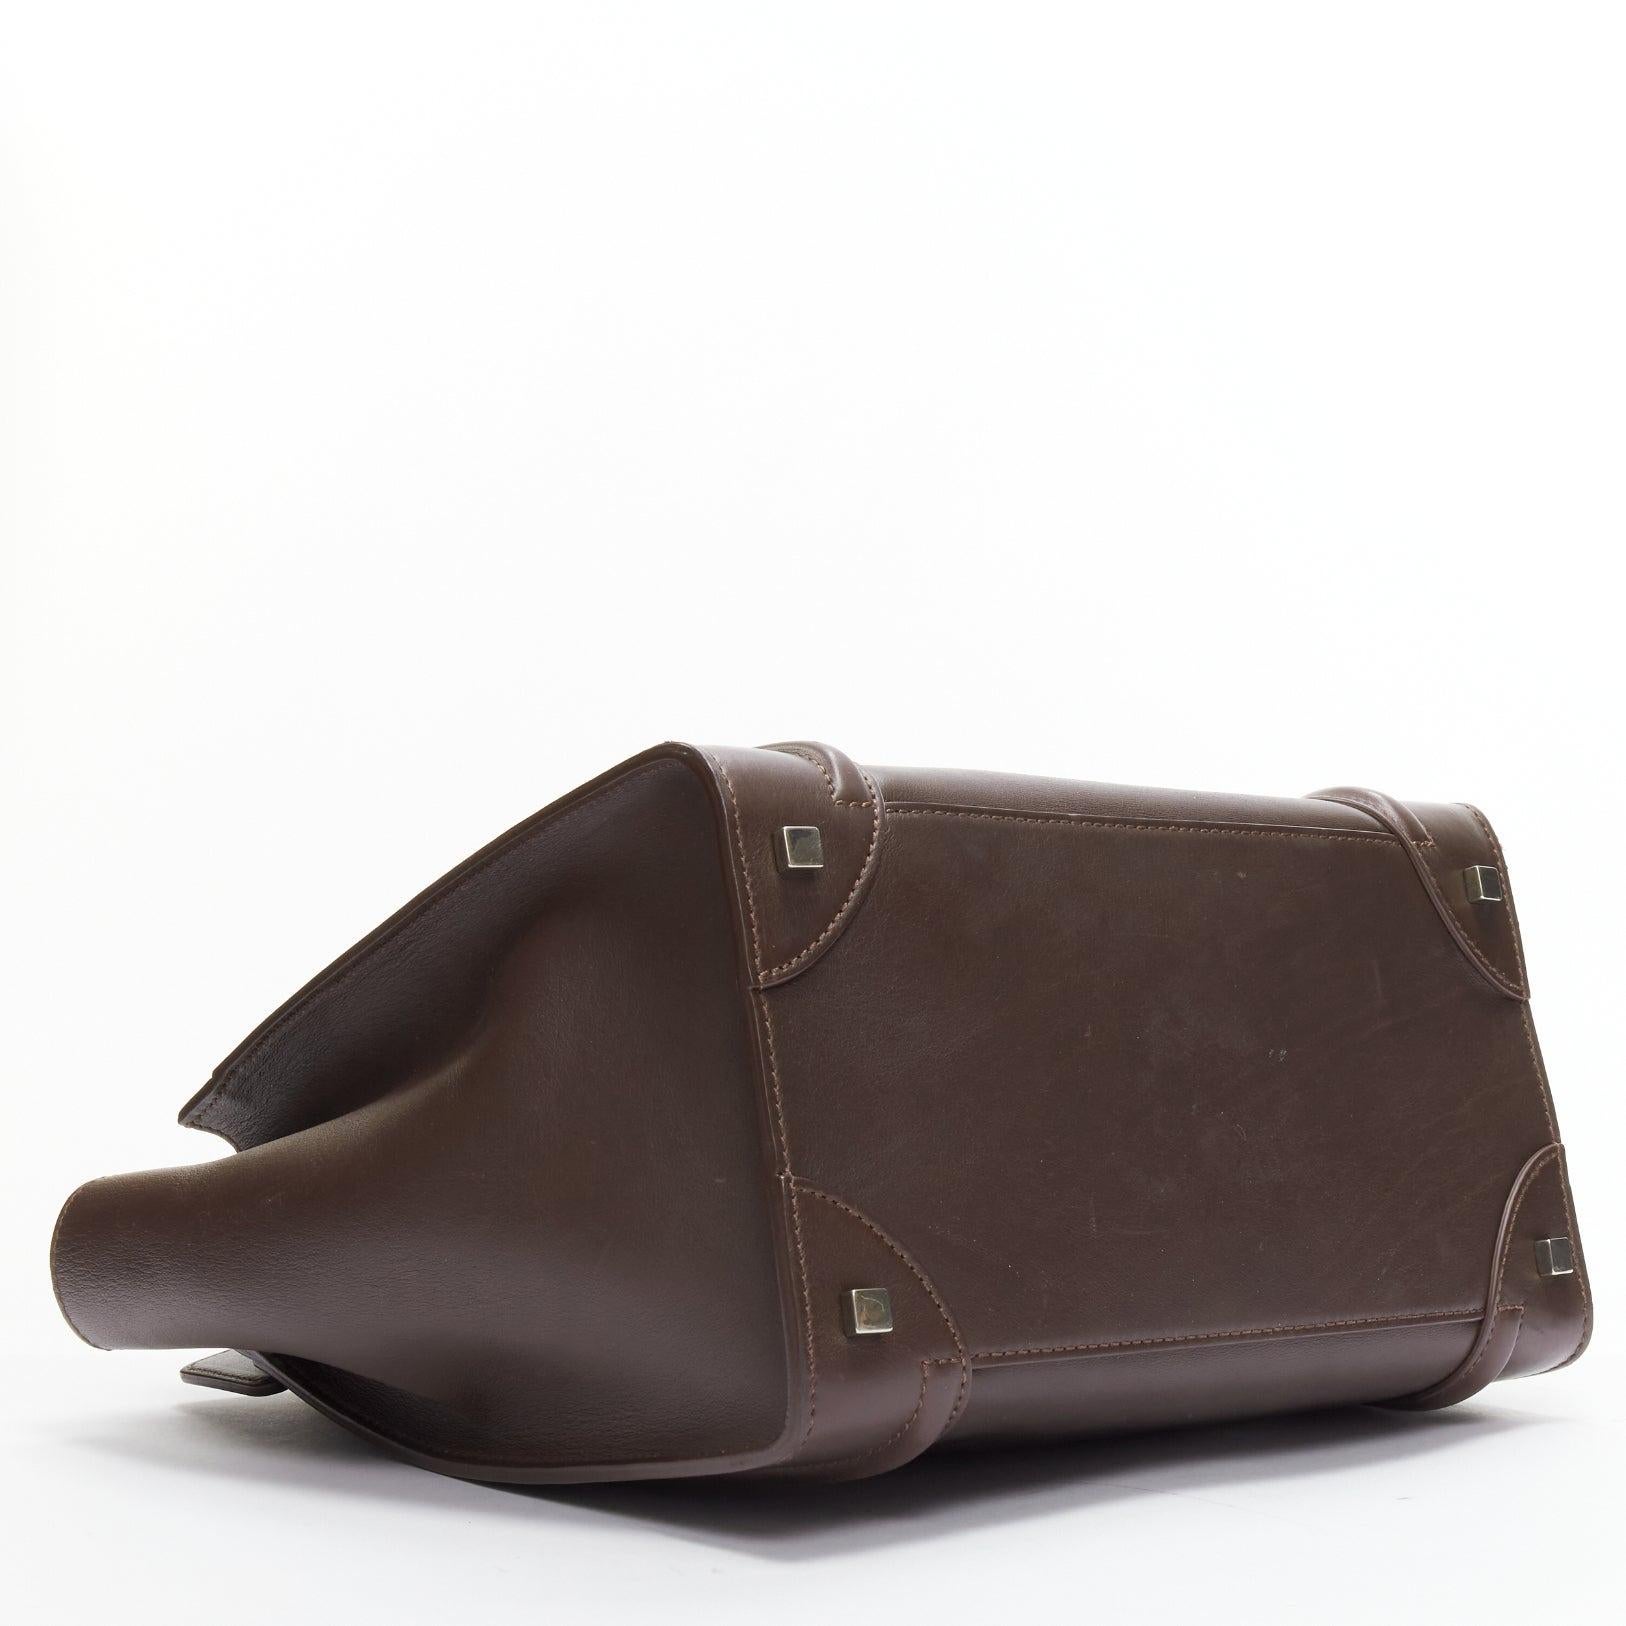 CELINE Luggage burgundy leather front zip logo shopper tote bag 2